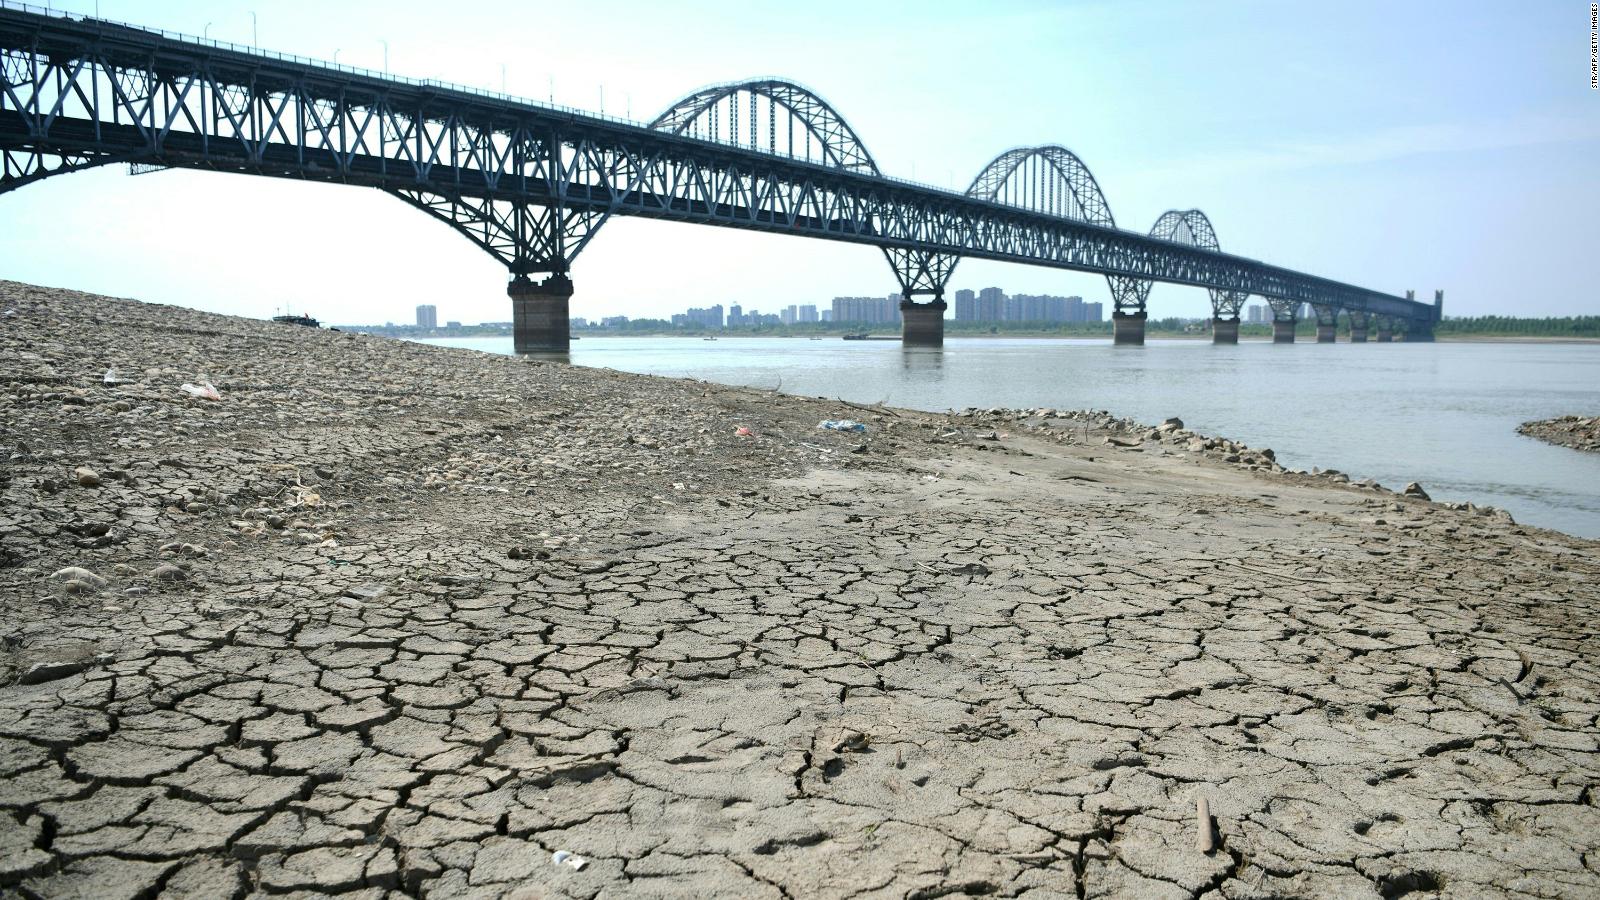 More information about "Κίνα: Οι αρχές εξέδωσαν εθνική προειδοποίηση για ξηρασία"